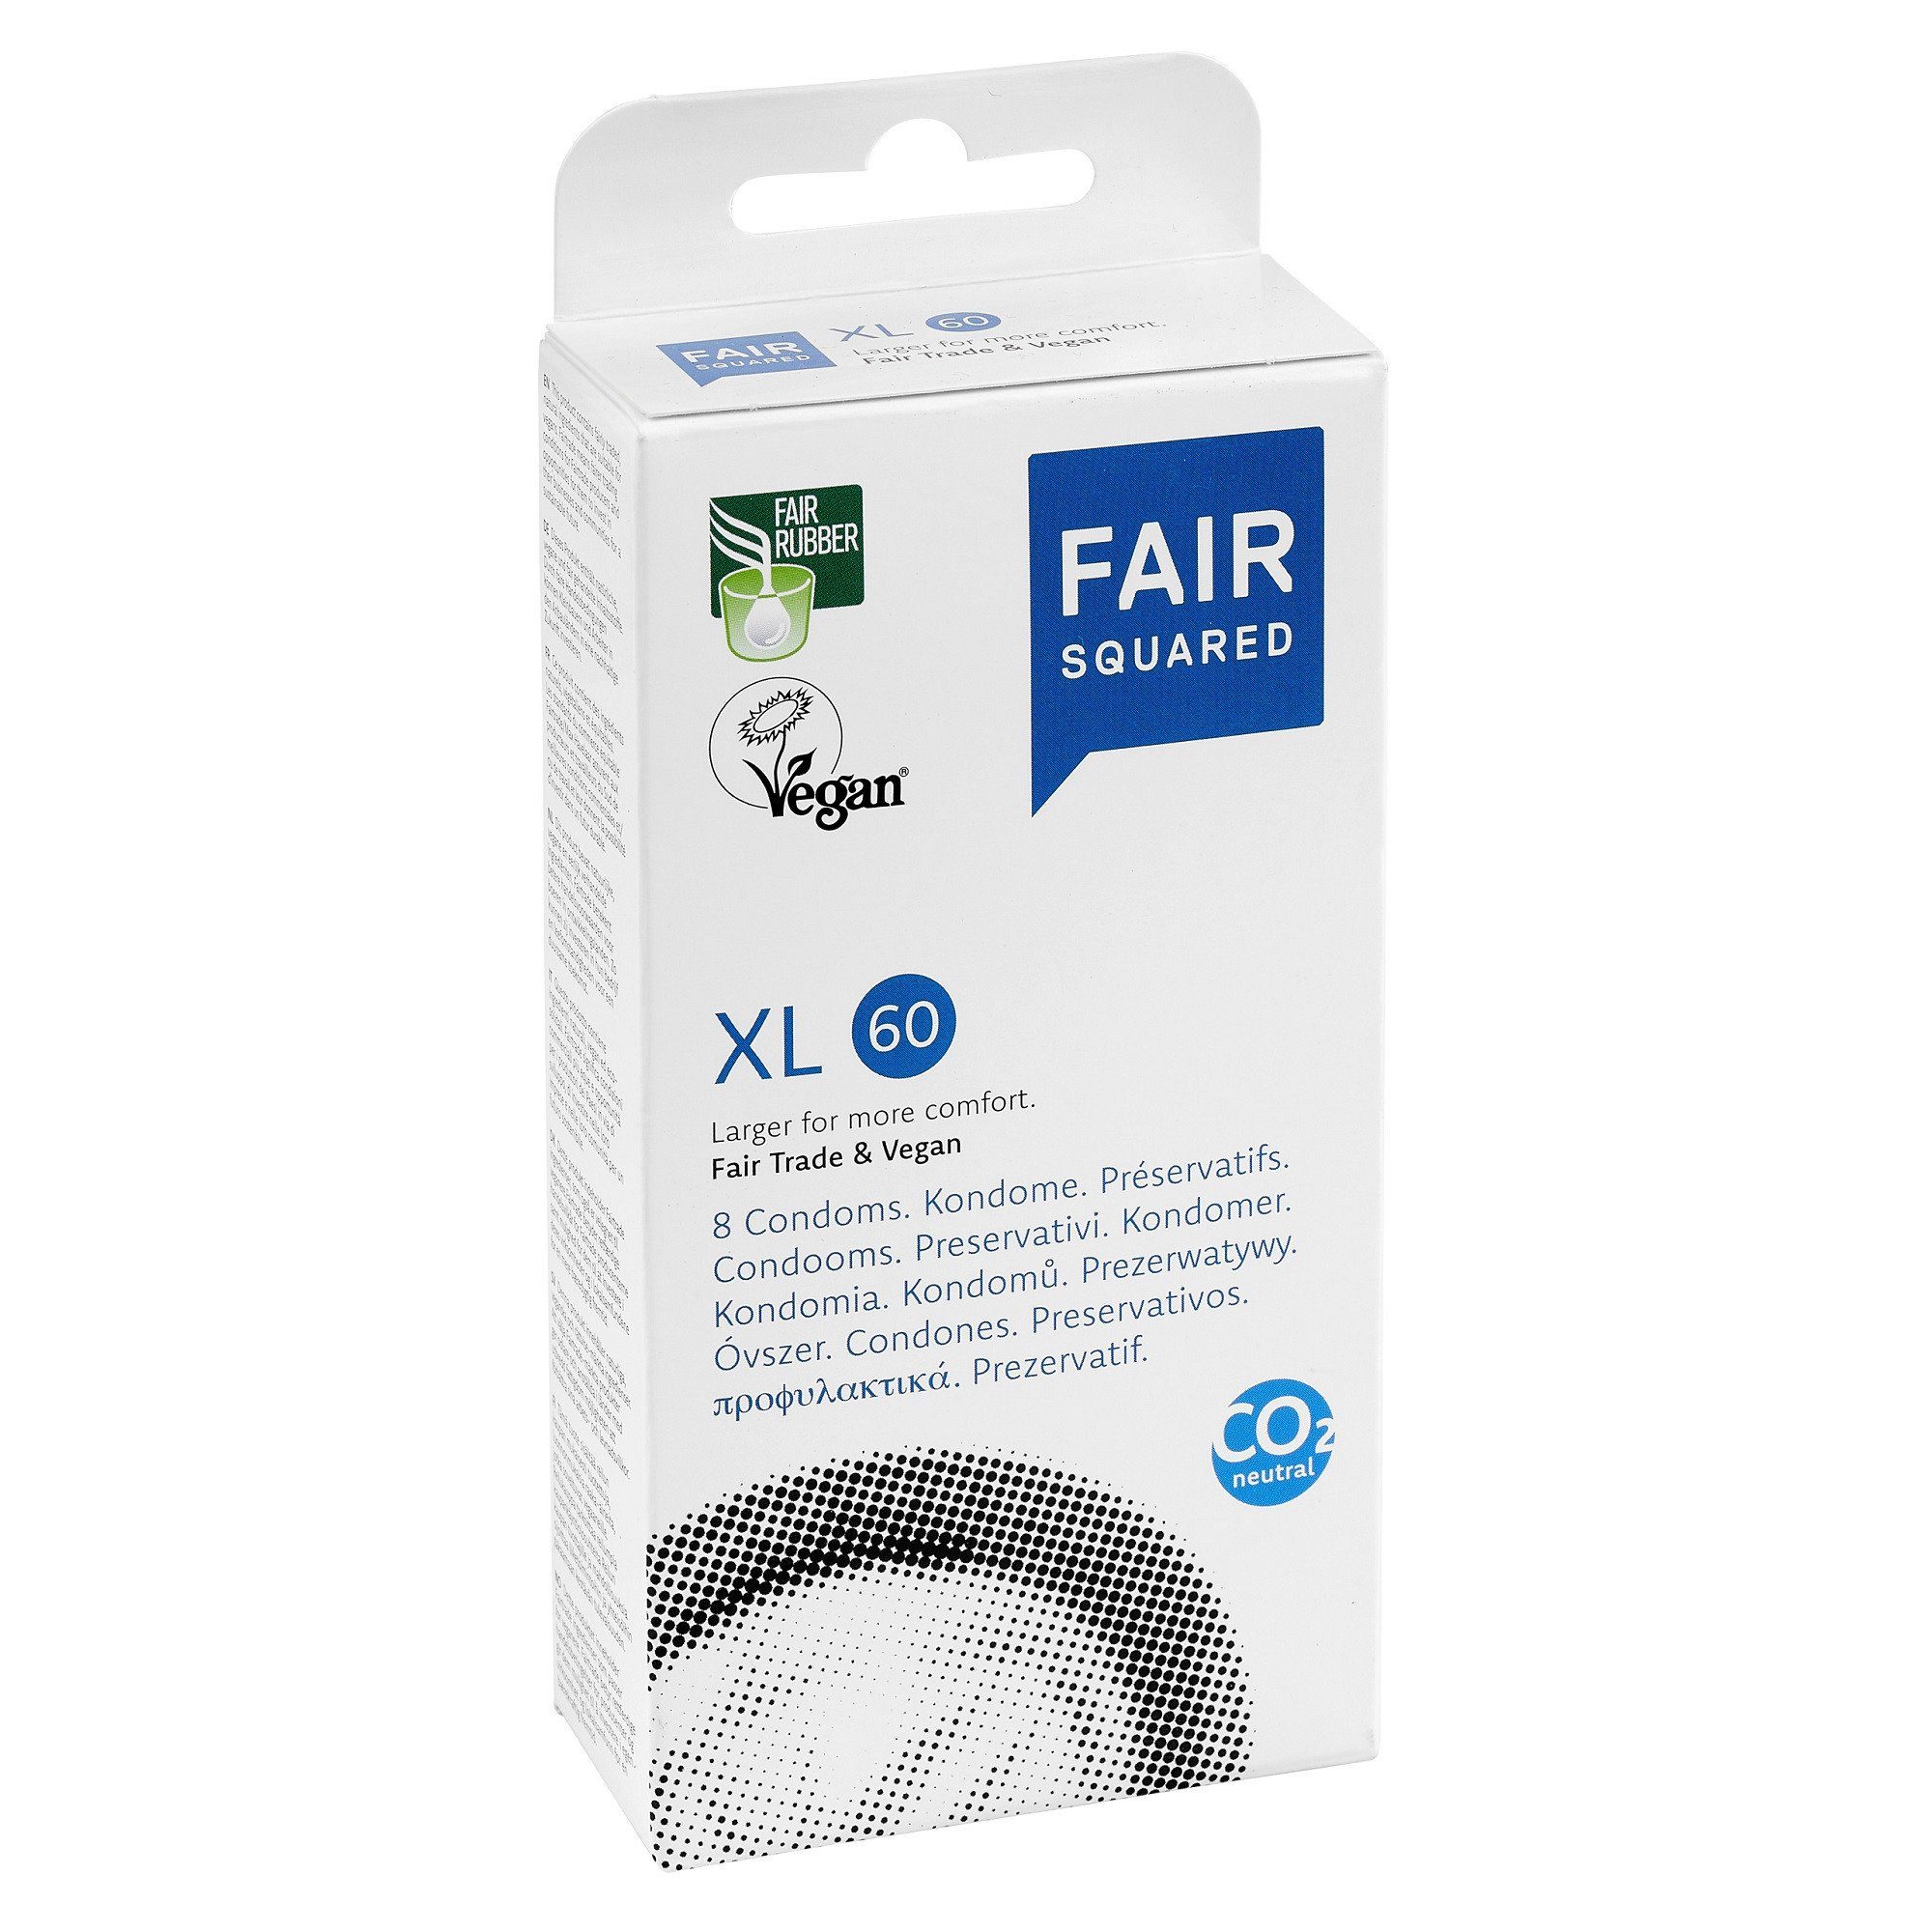 Fair Squared Kondome FAIR SQUARED XL Kondome 60 mm – Vegane Kondome aus fair gehandeltem Naturkautschuk – Kondom gefühlsecht hauchzart